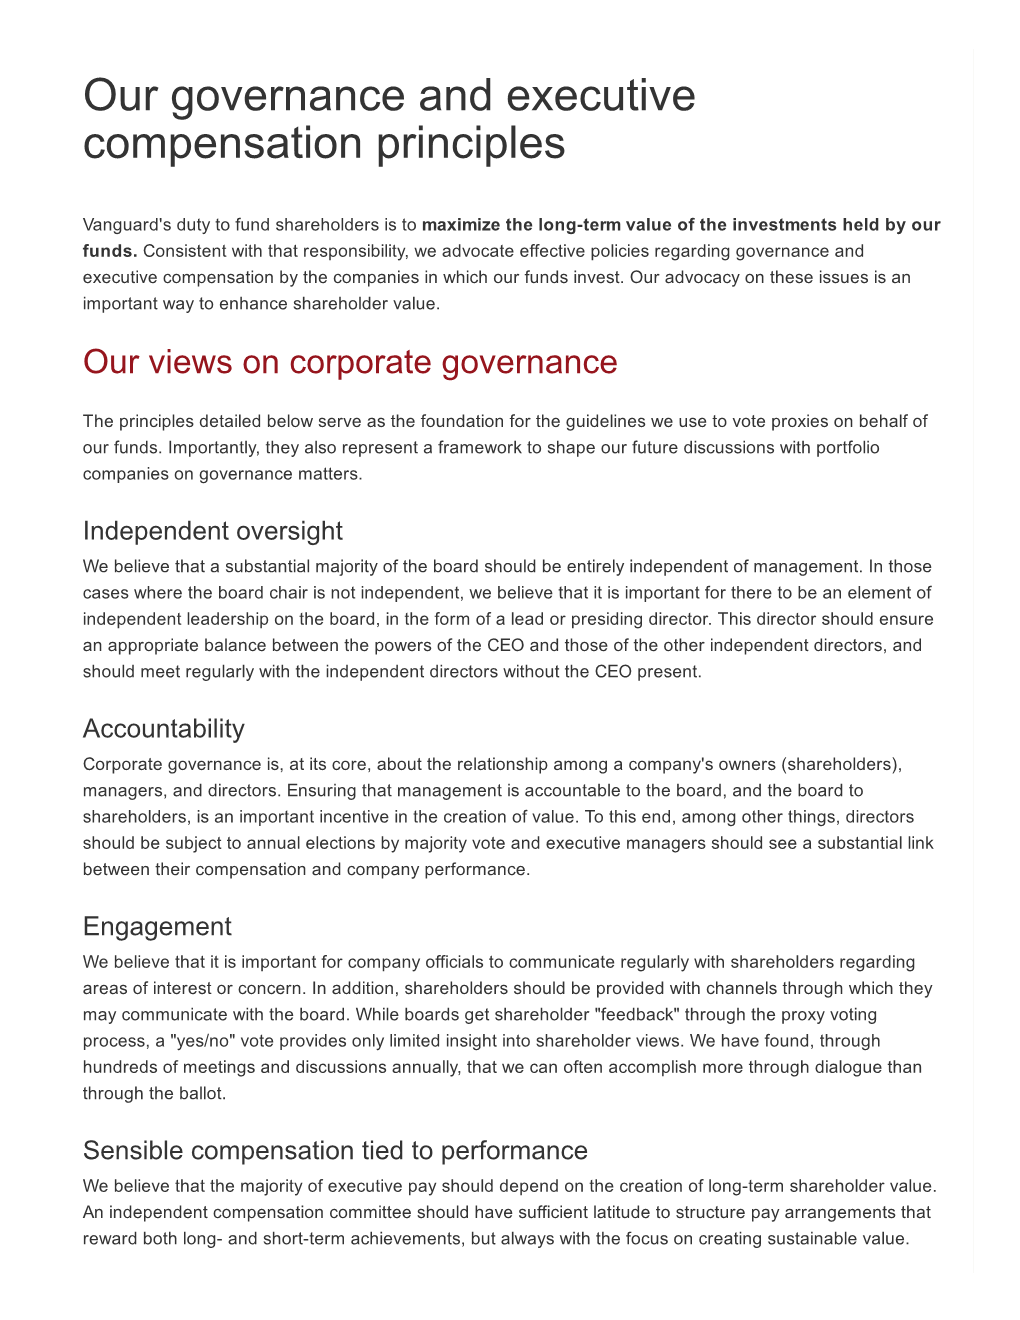 Vanguard's Governance and Executive Compensation Principles